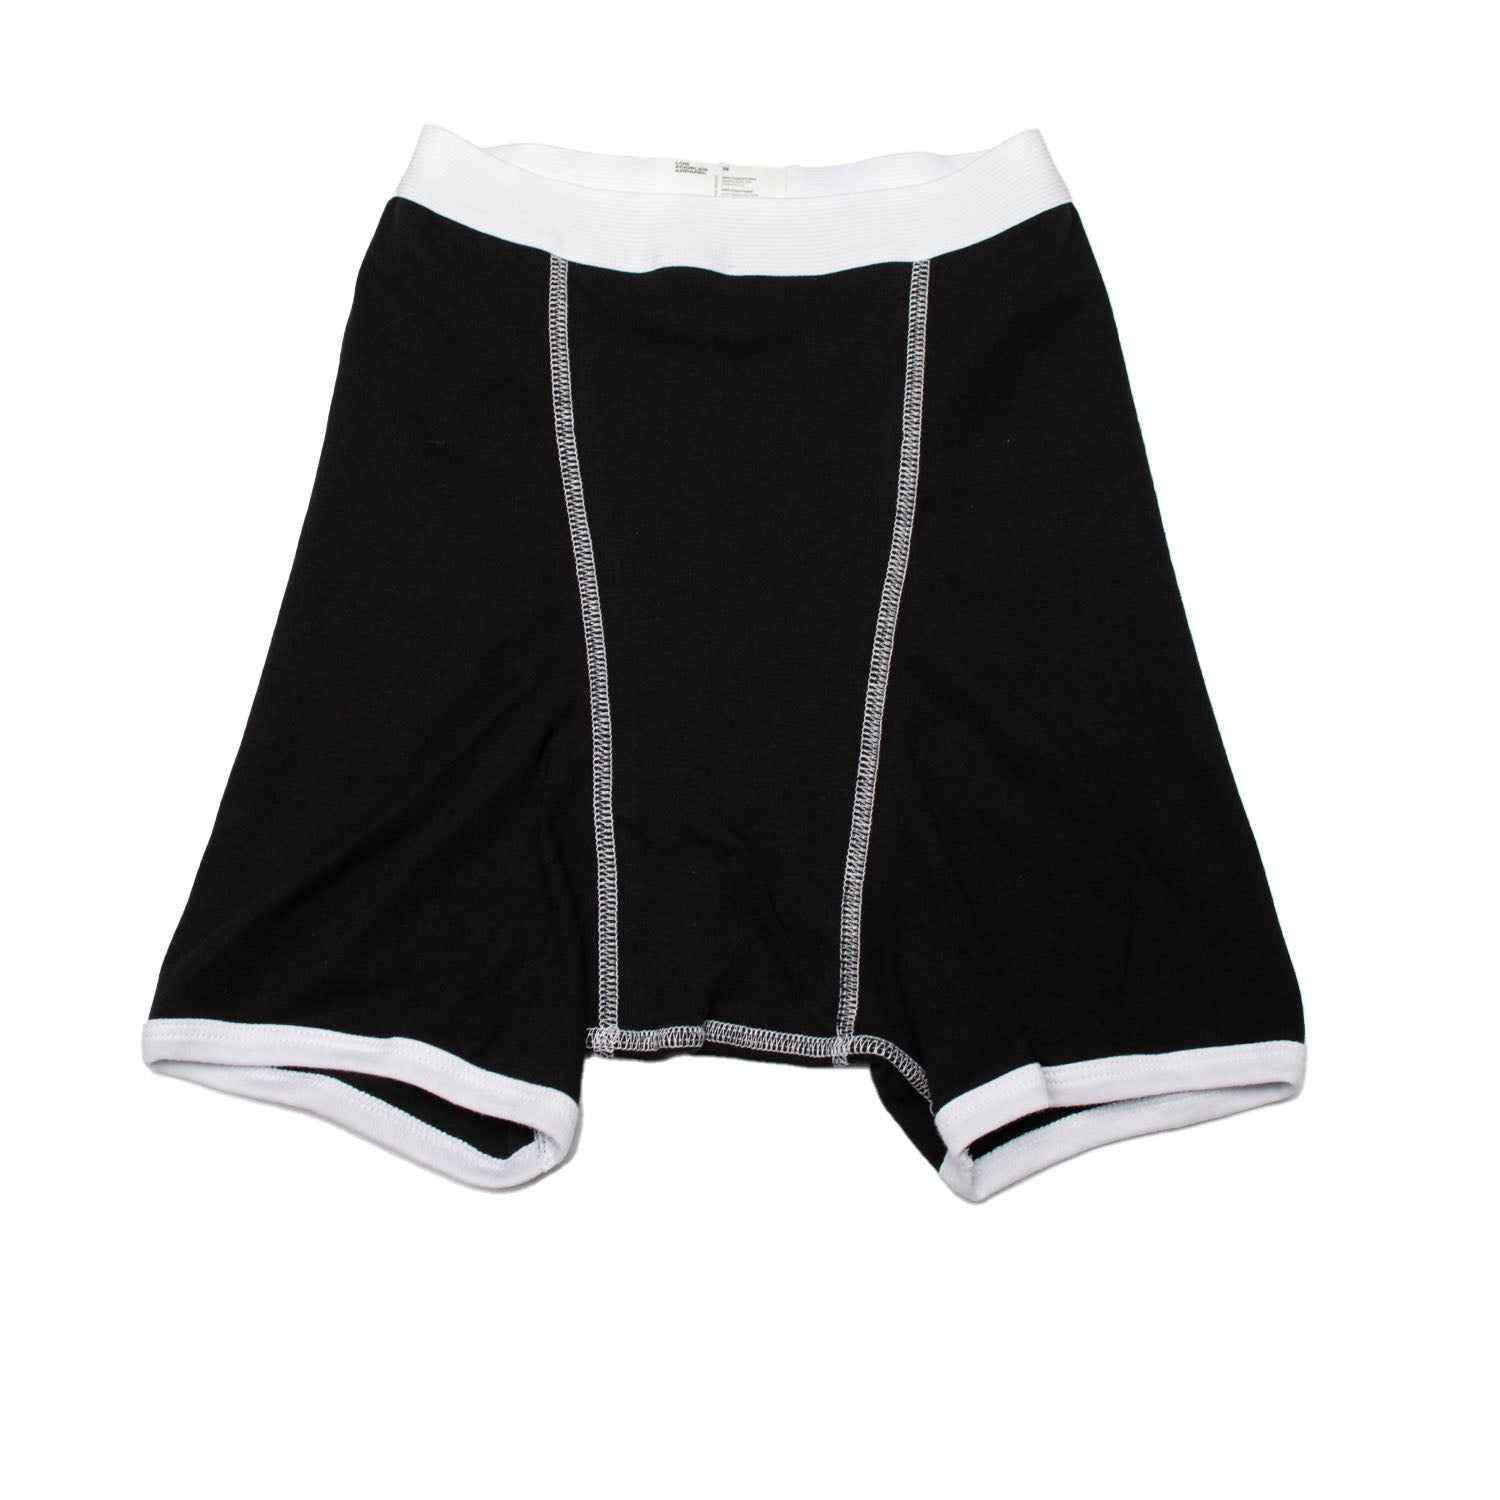 KCDC Baby Rib Boxer Brief  in Black with white stitching, white waistband, and white piping around leg holes.